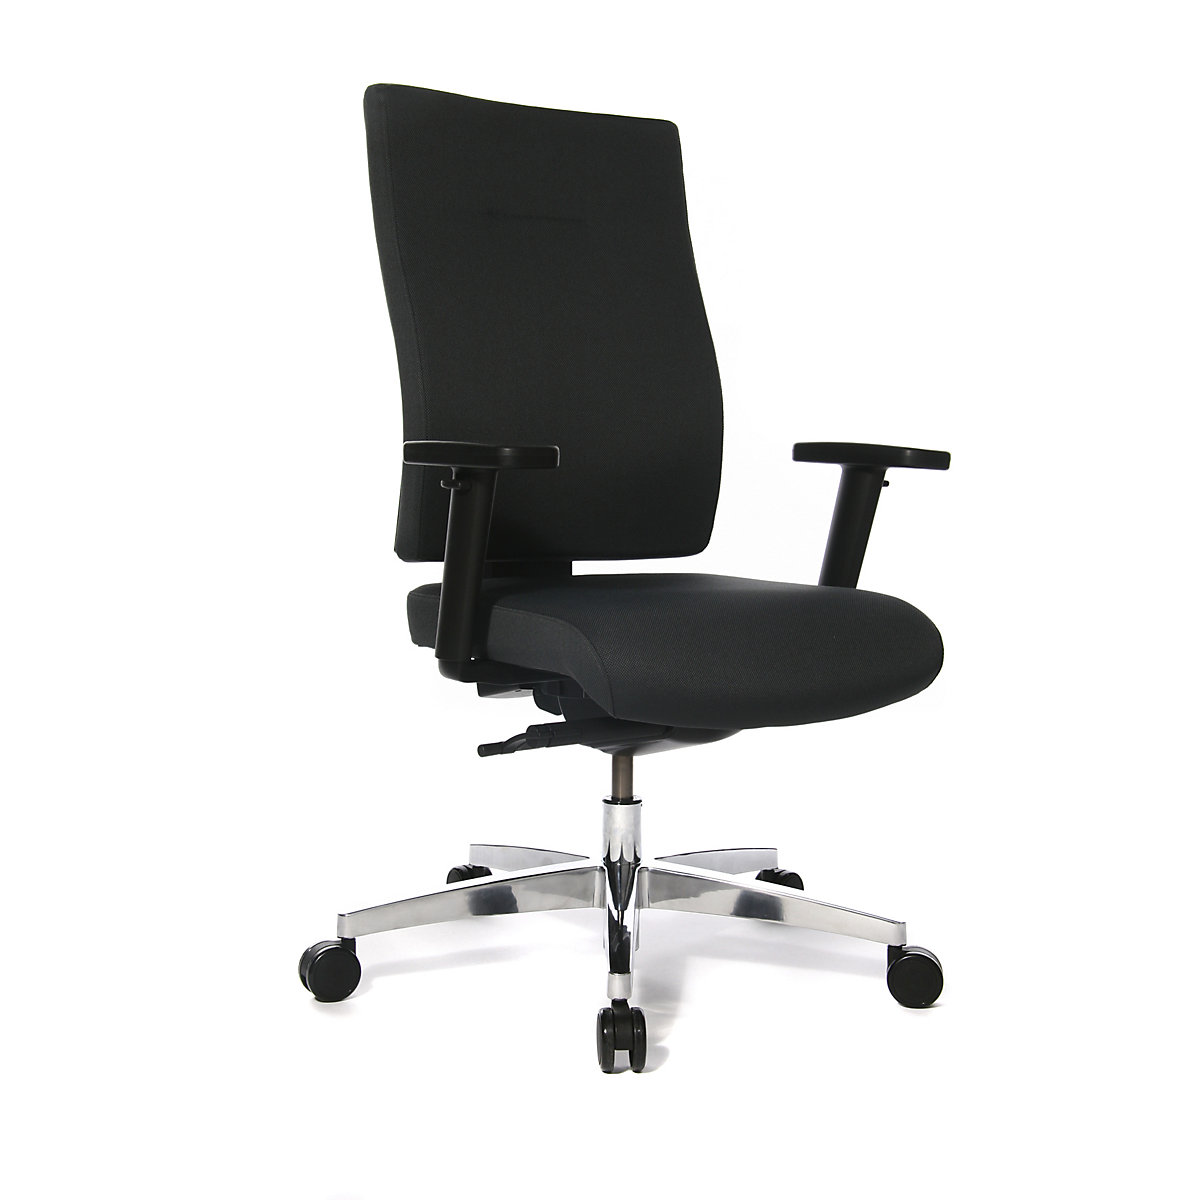 PROFI STAR 15 office swivel chair – Topstar